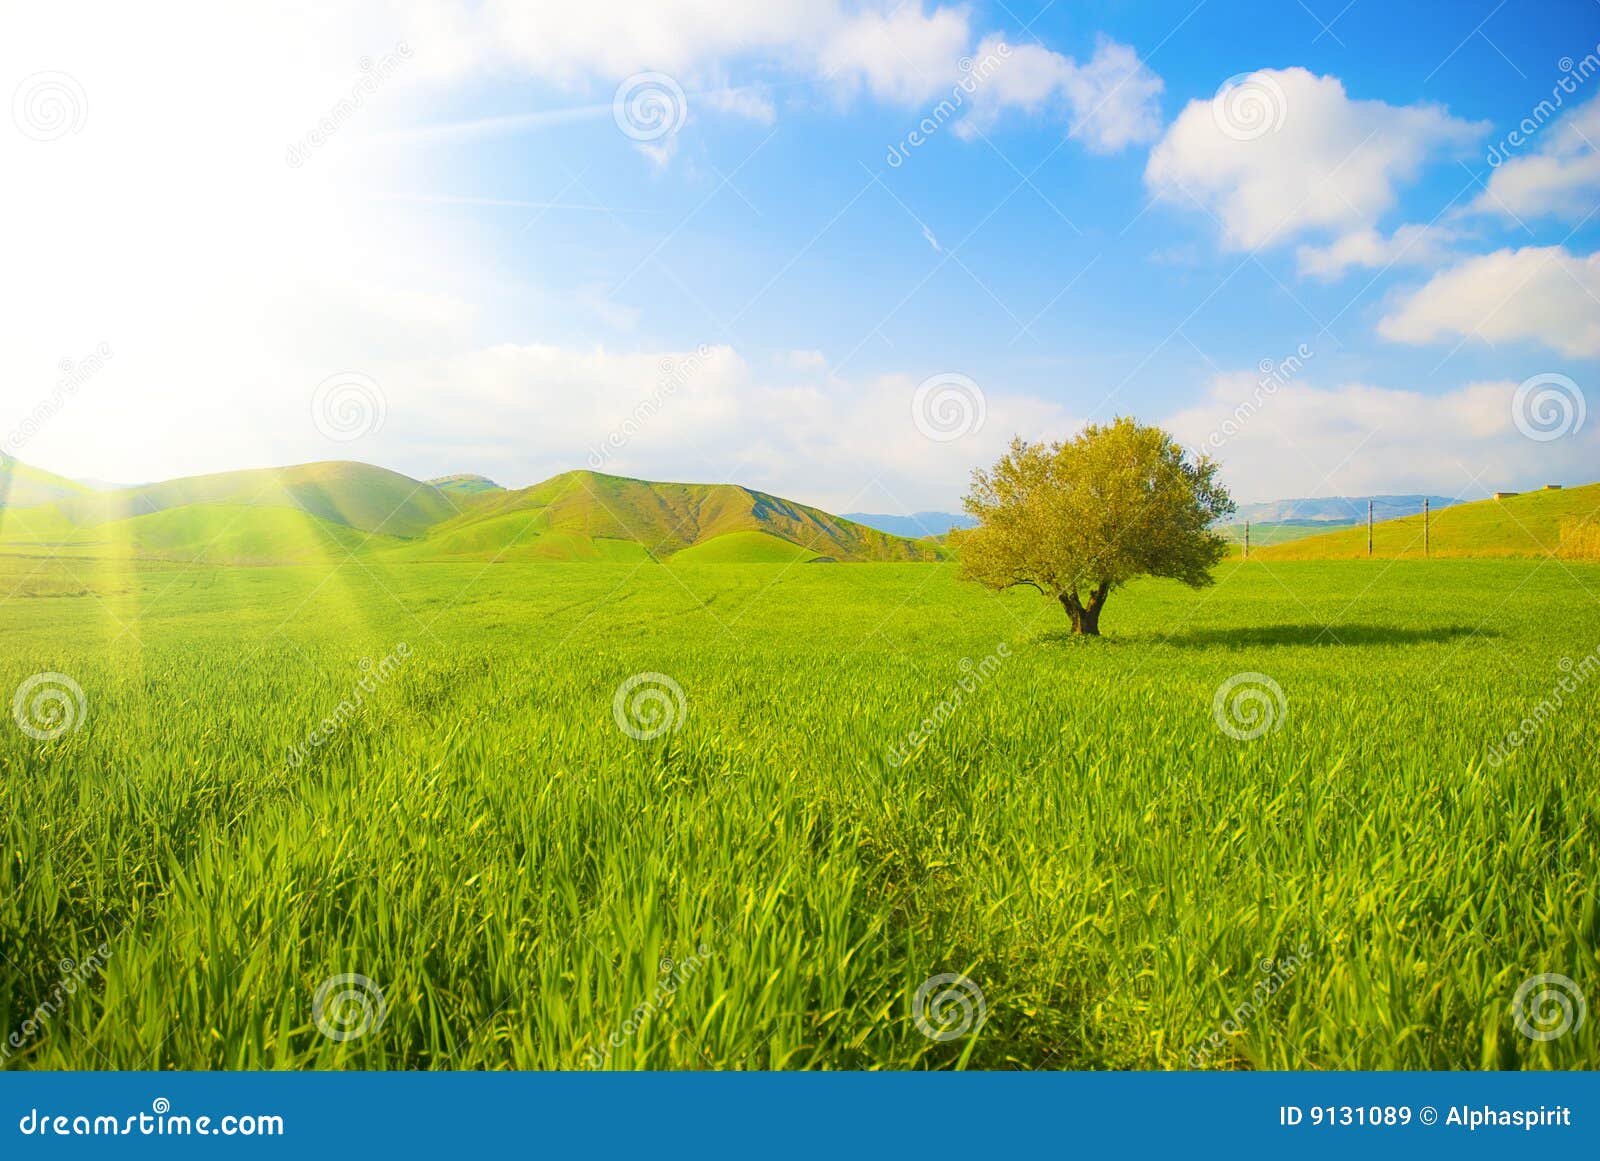 grassland and sunray